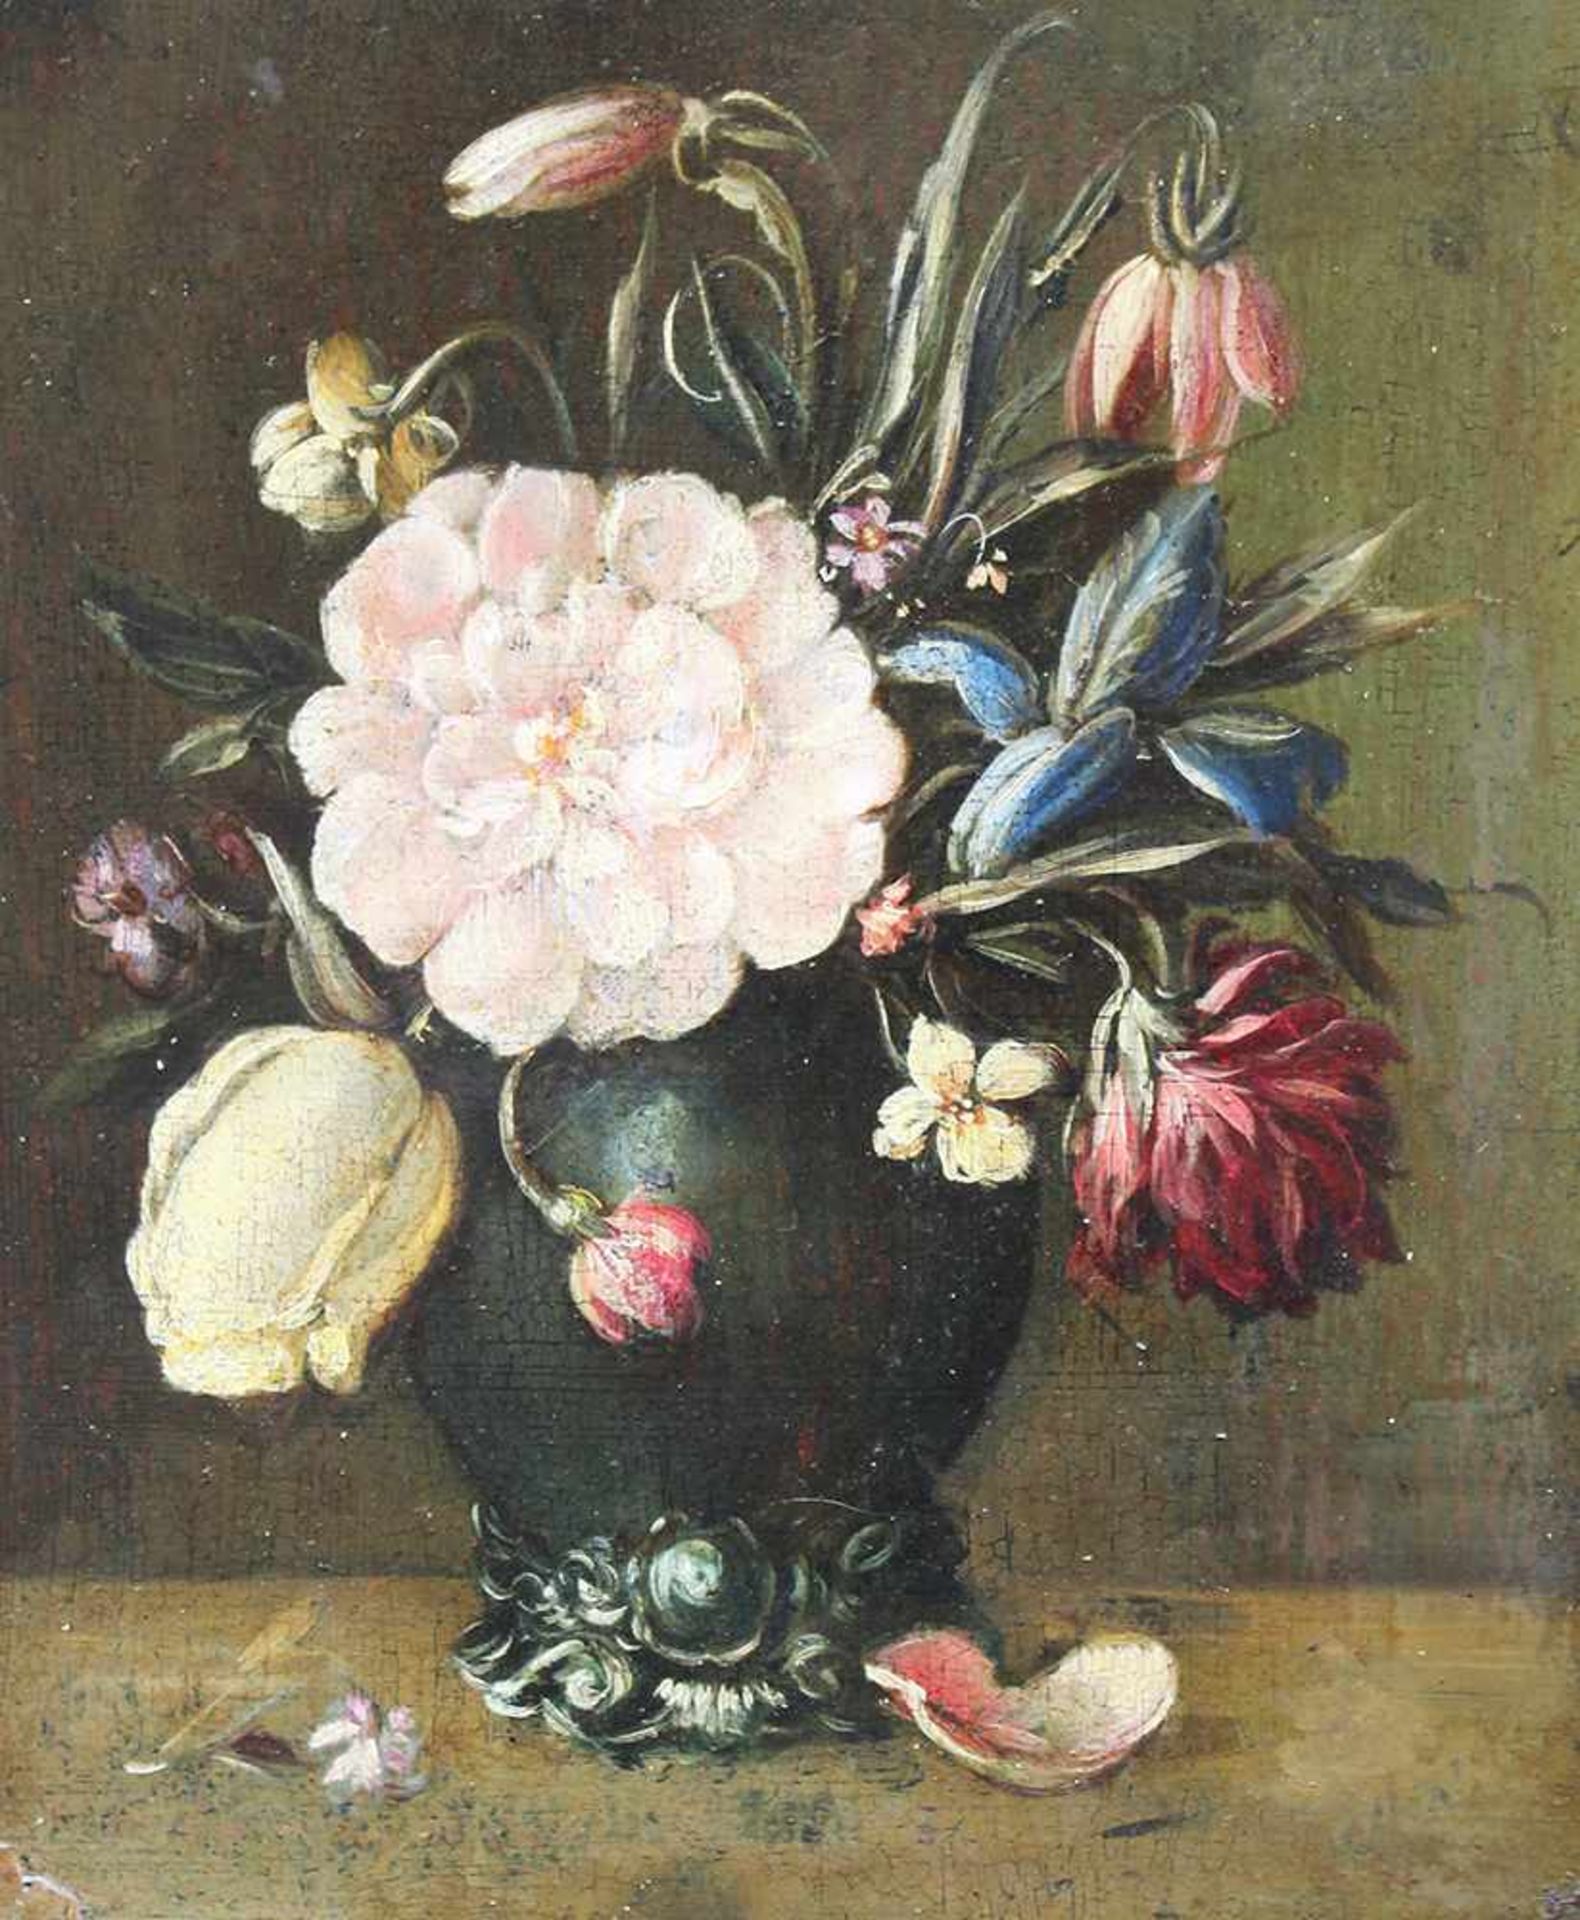 Ambrosuis Boschaert (1573-1621)- follower. Still life with flowers in a vase. Oil on Copper. 23.